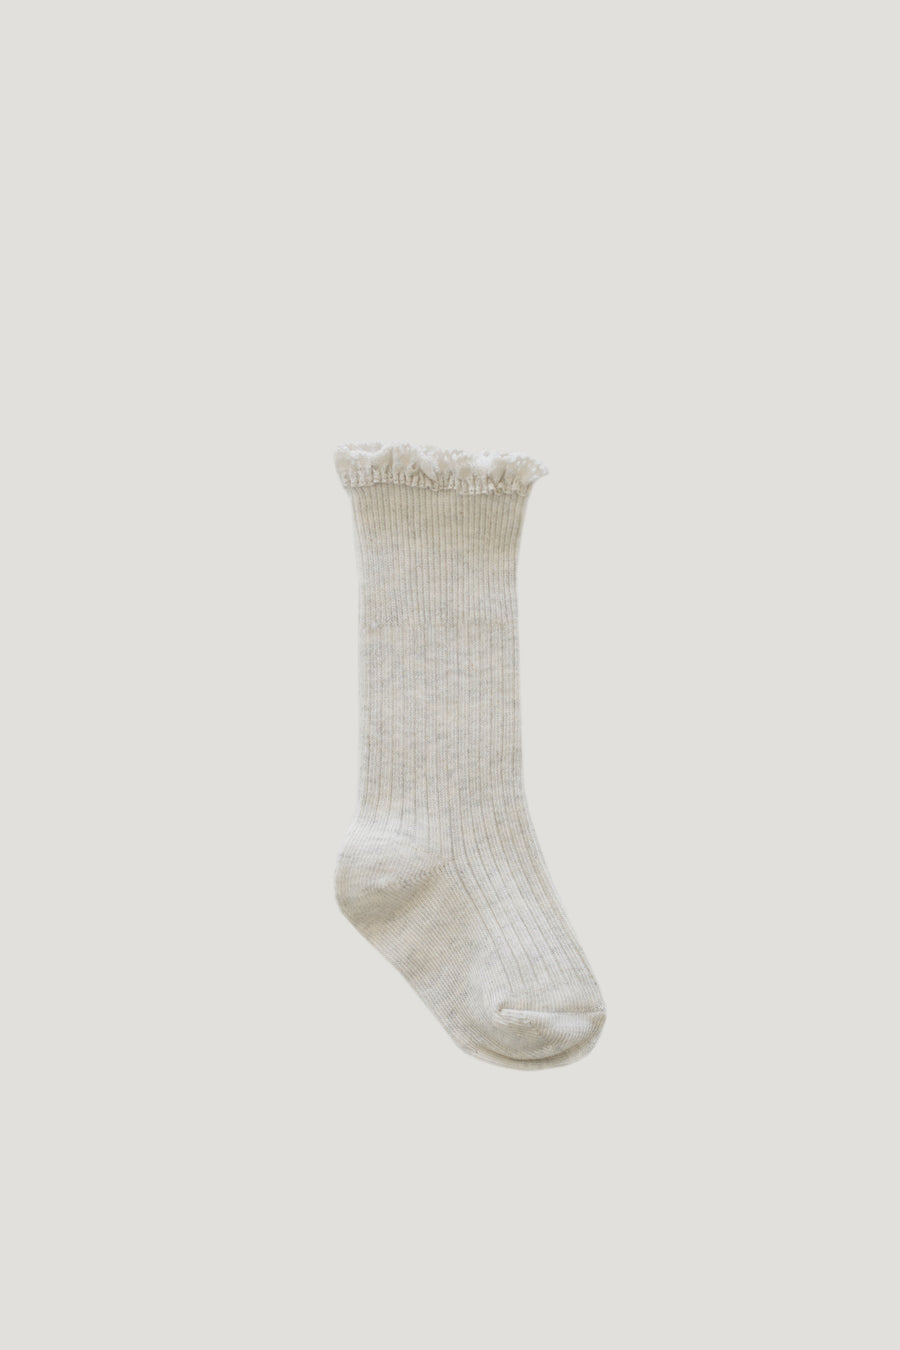 Frill Socks - Oatmeal